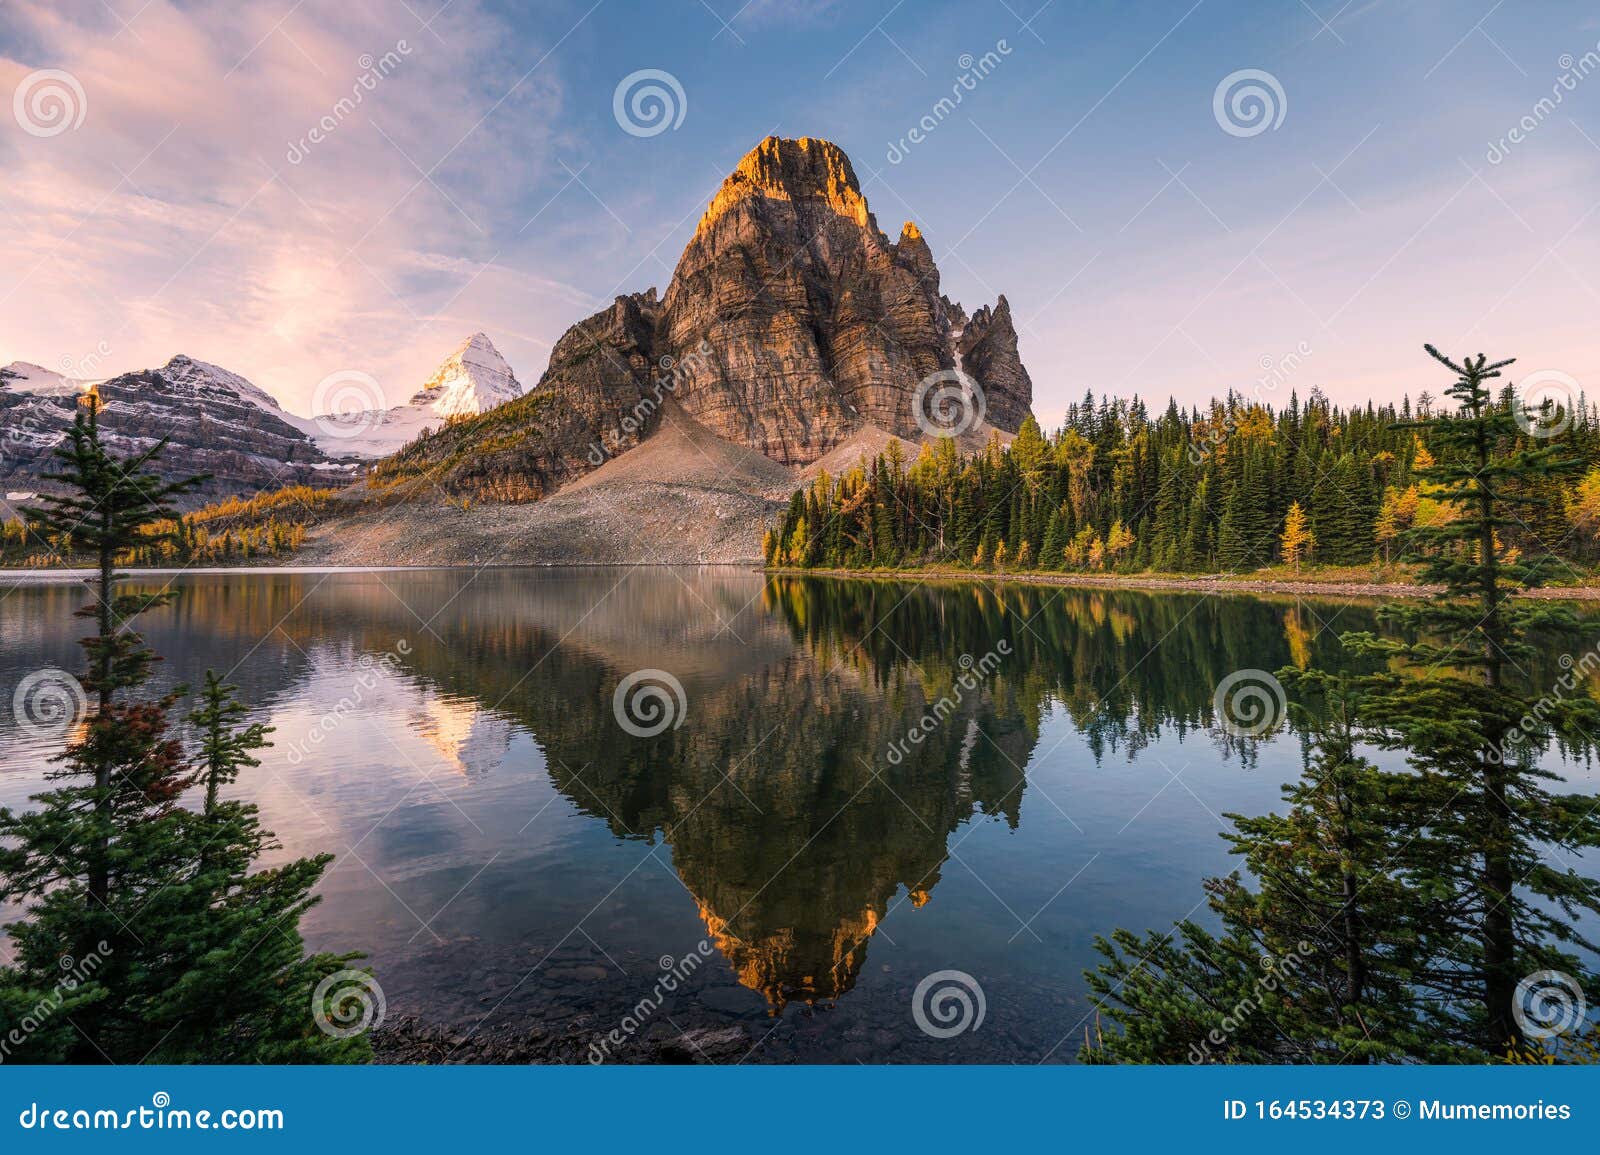 scenery of sunburst lake and mount assiniboine reflections between pine tree at sunrise